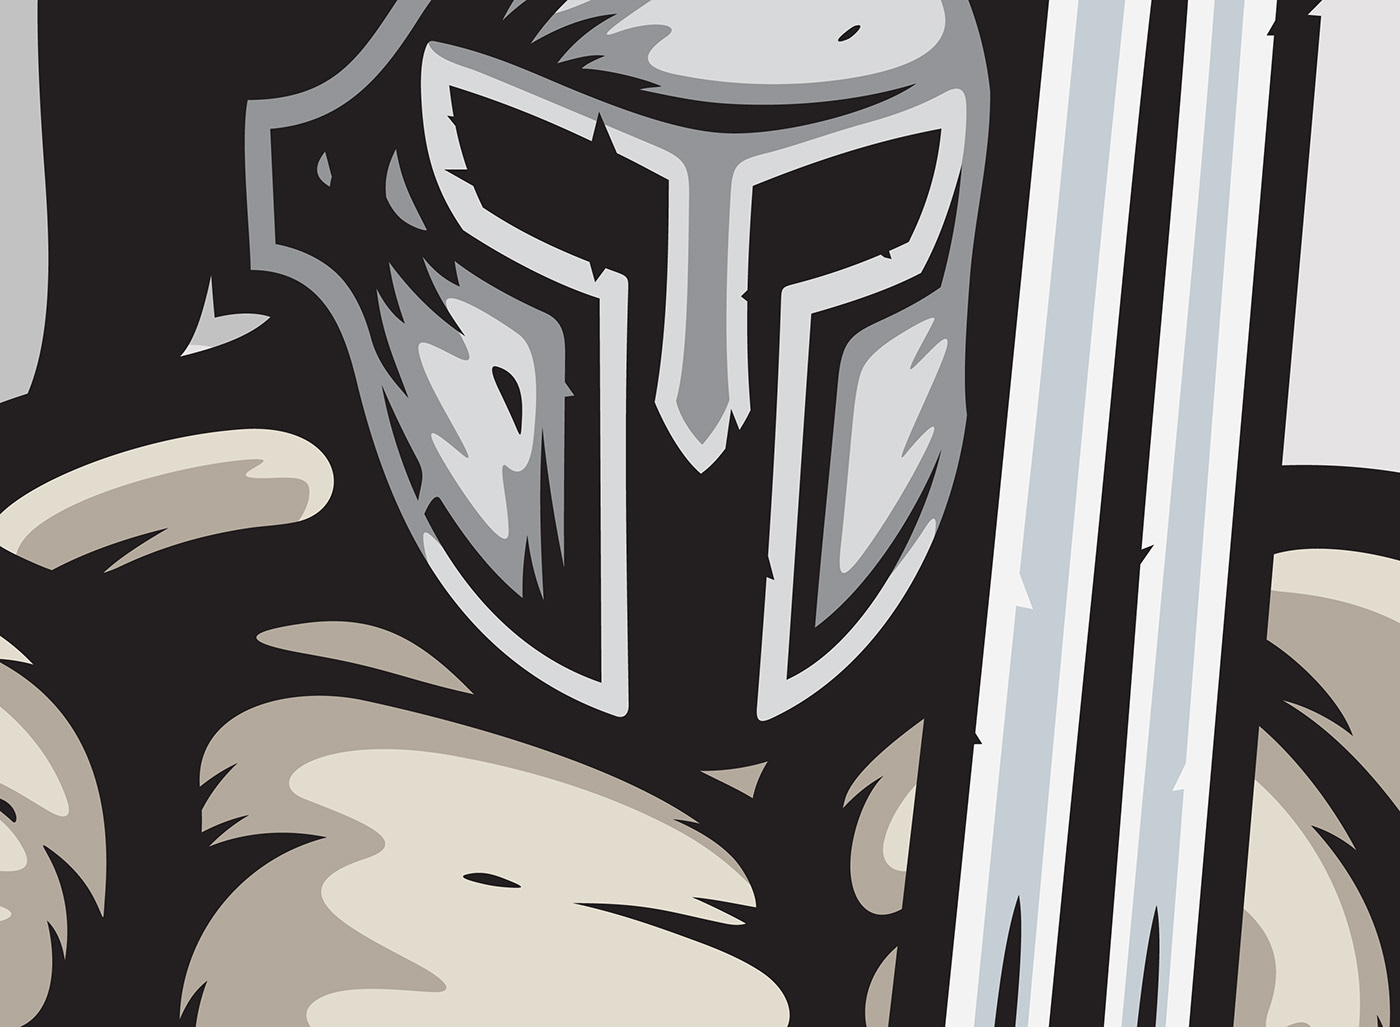 sparta warrior Helmet vector ILLUSTRATION  T-Shirt Design art Character artwork concept art